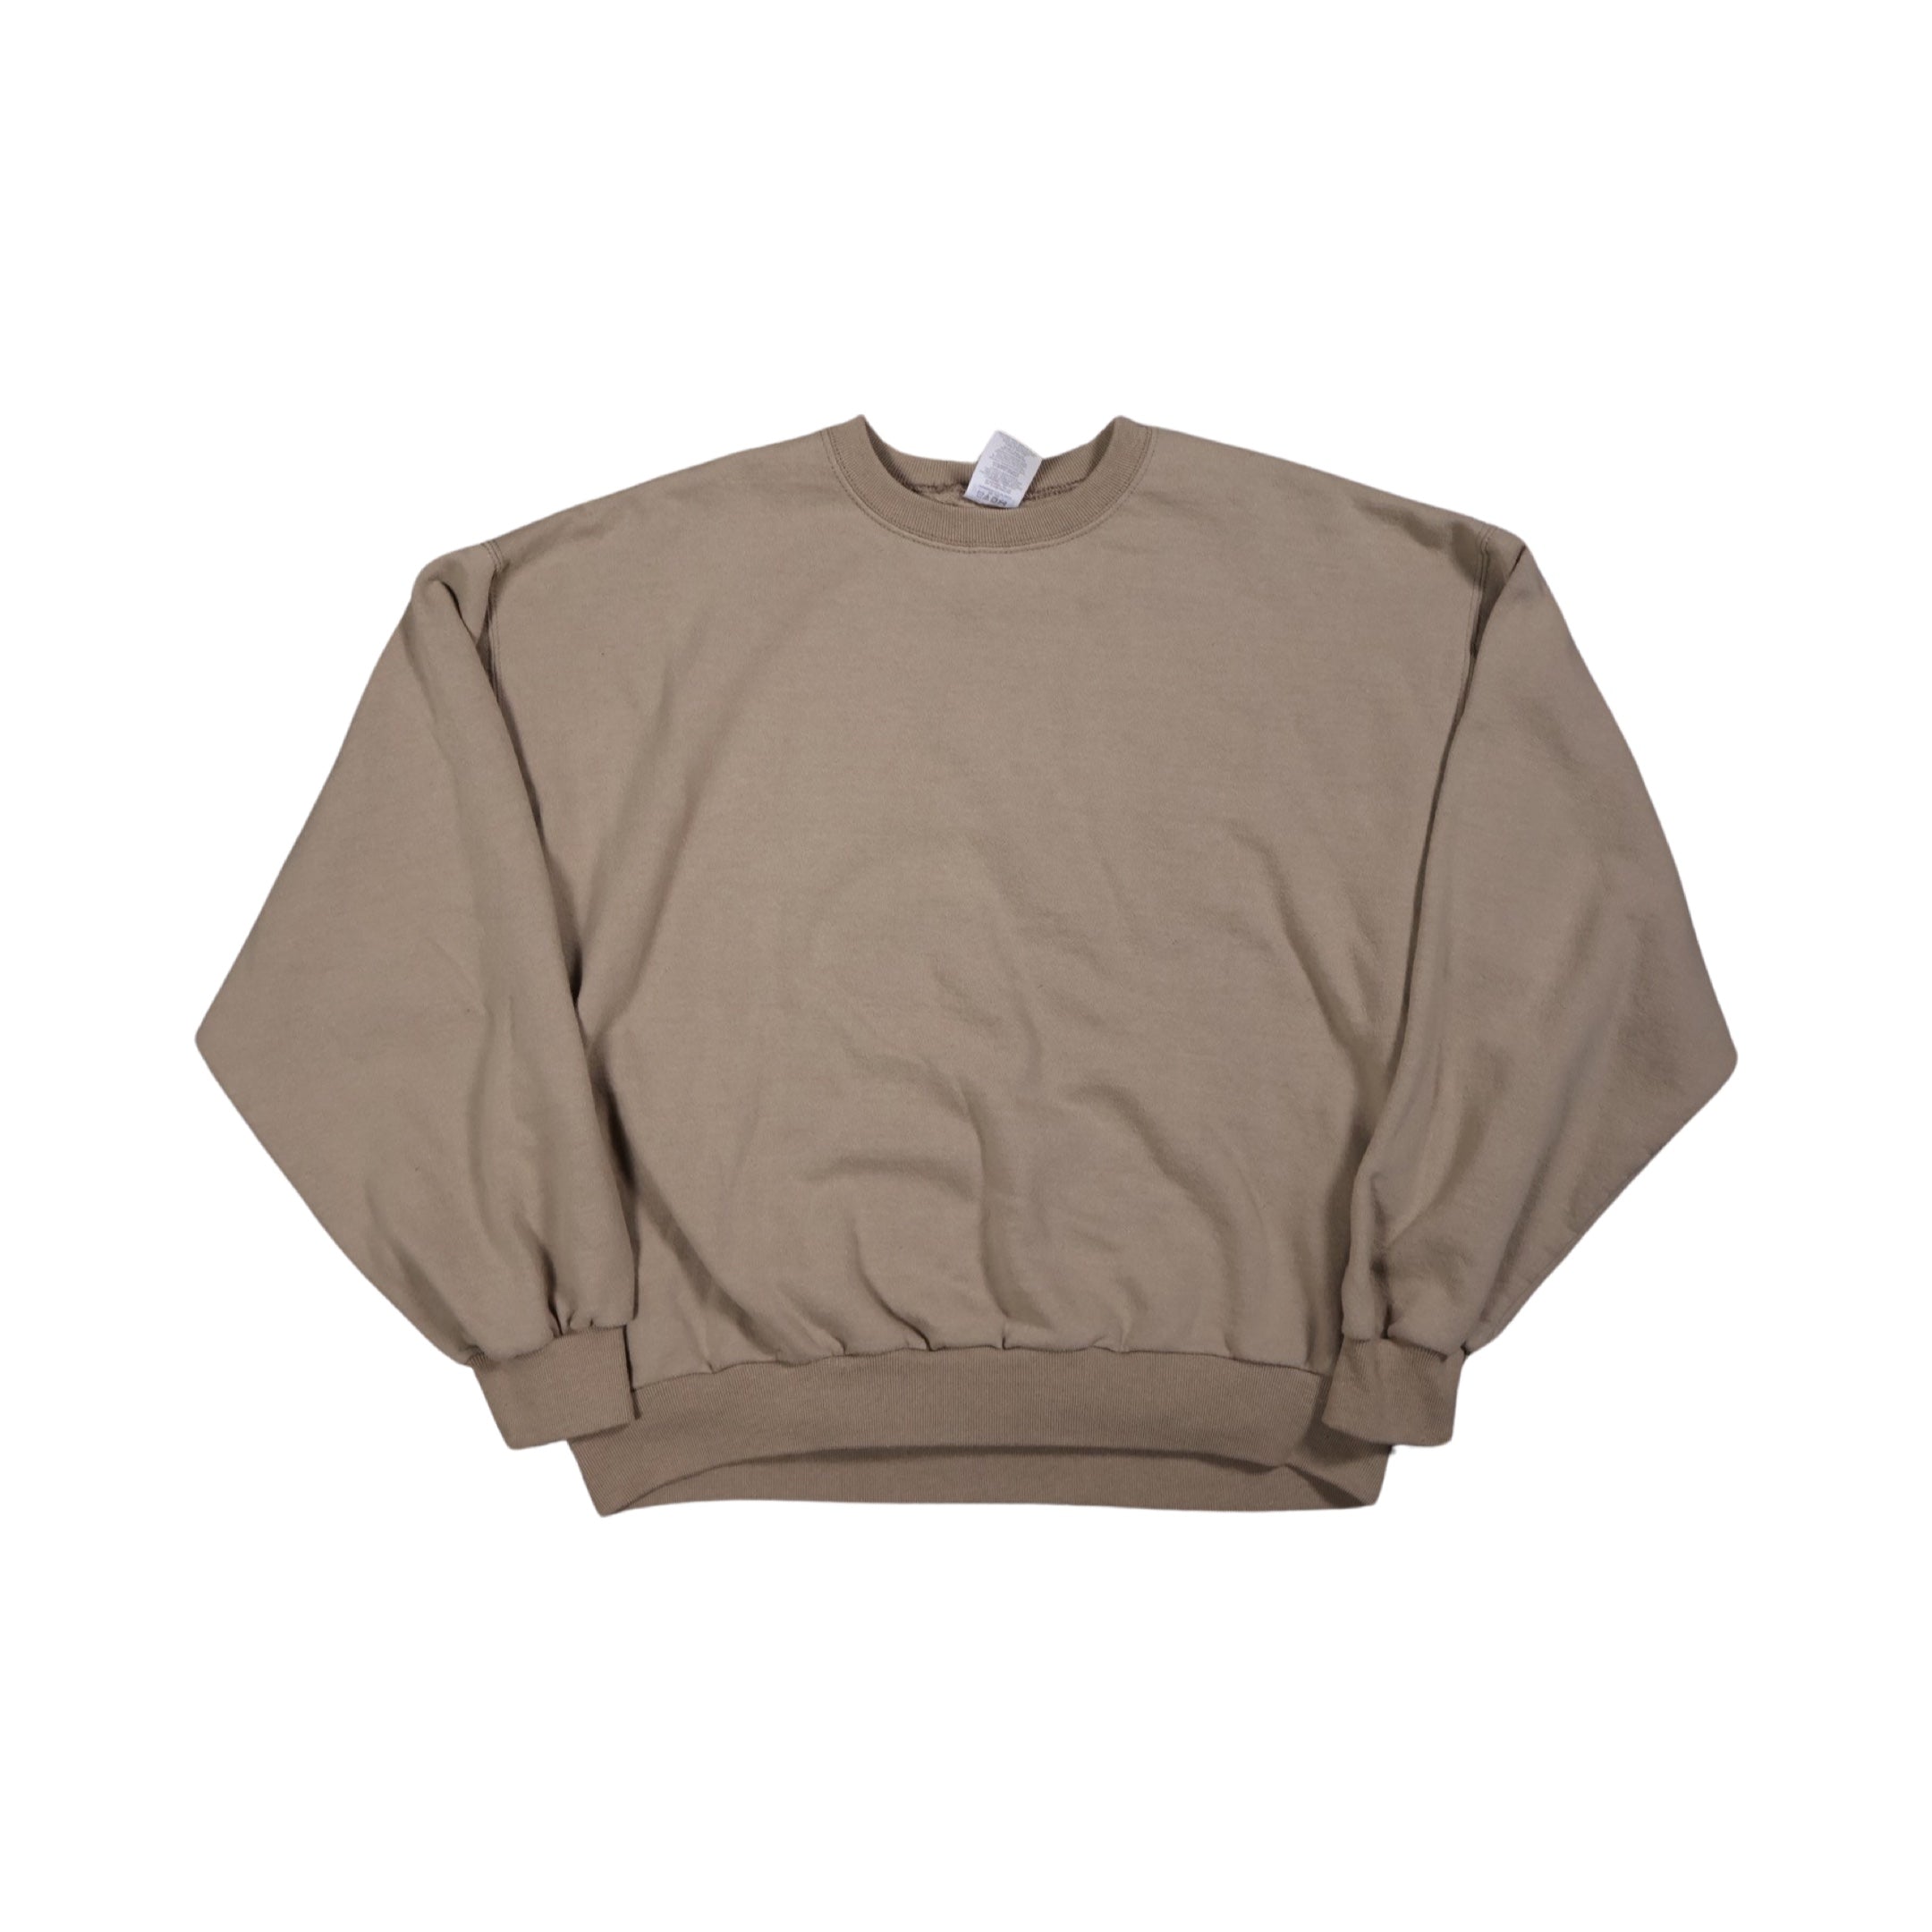 Tan Blank 00s Sweater (Medium)